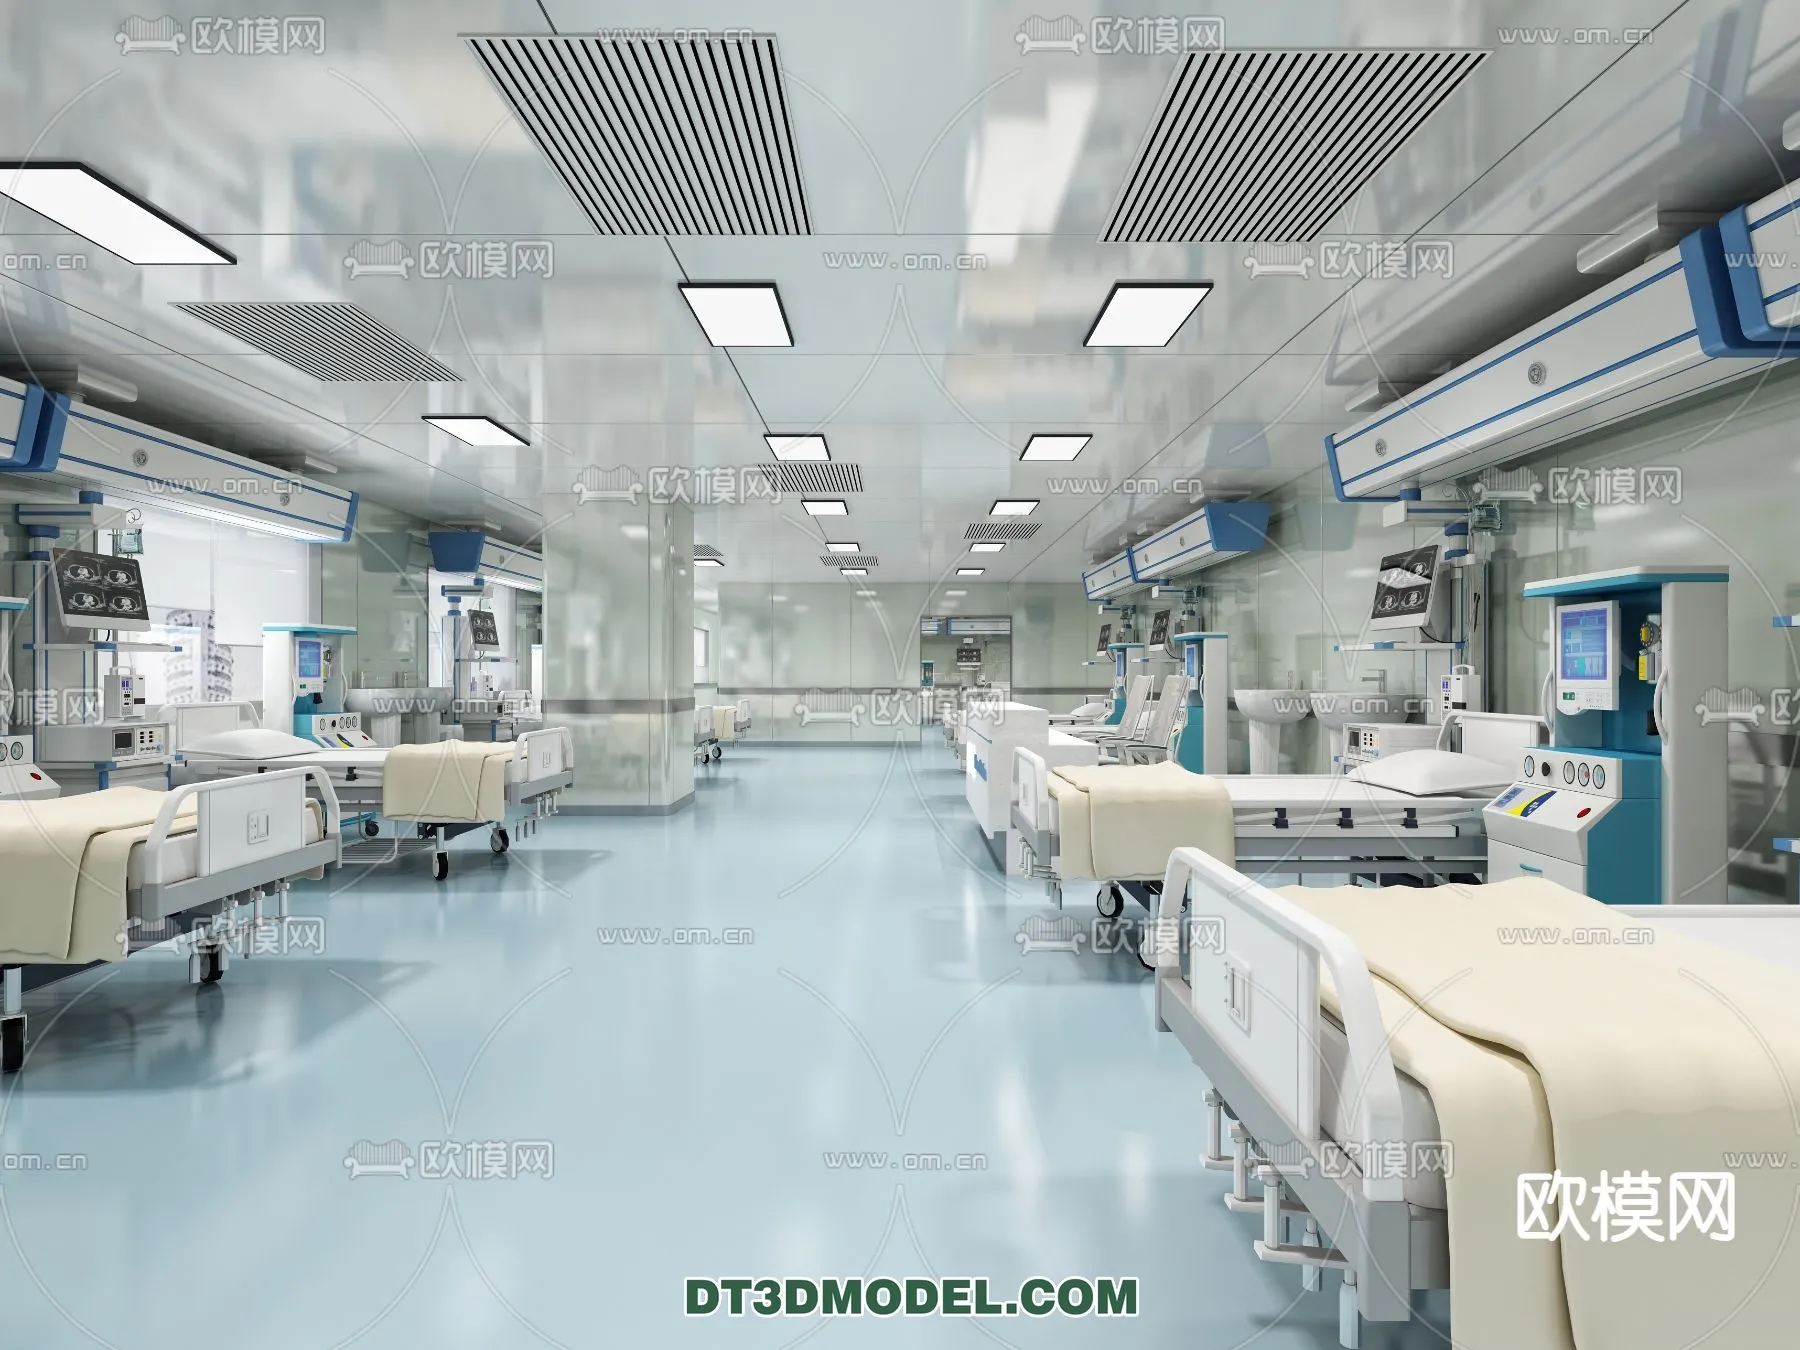 HOSPITAL 3D SCENES – MODERN – 0144